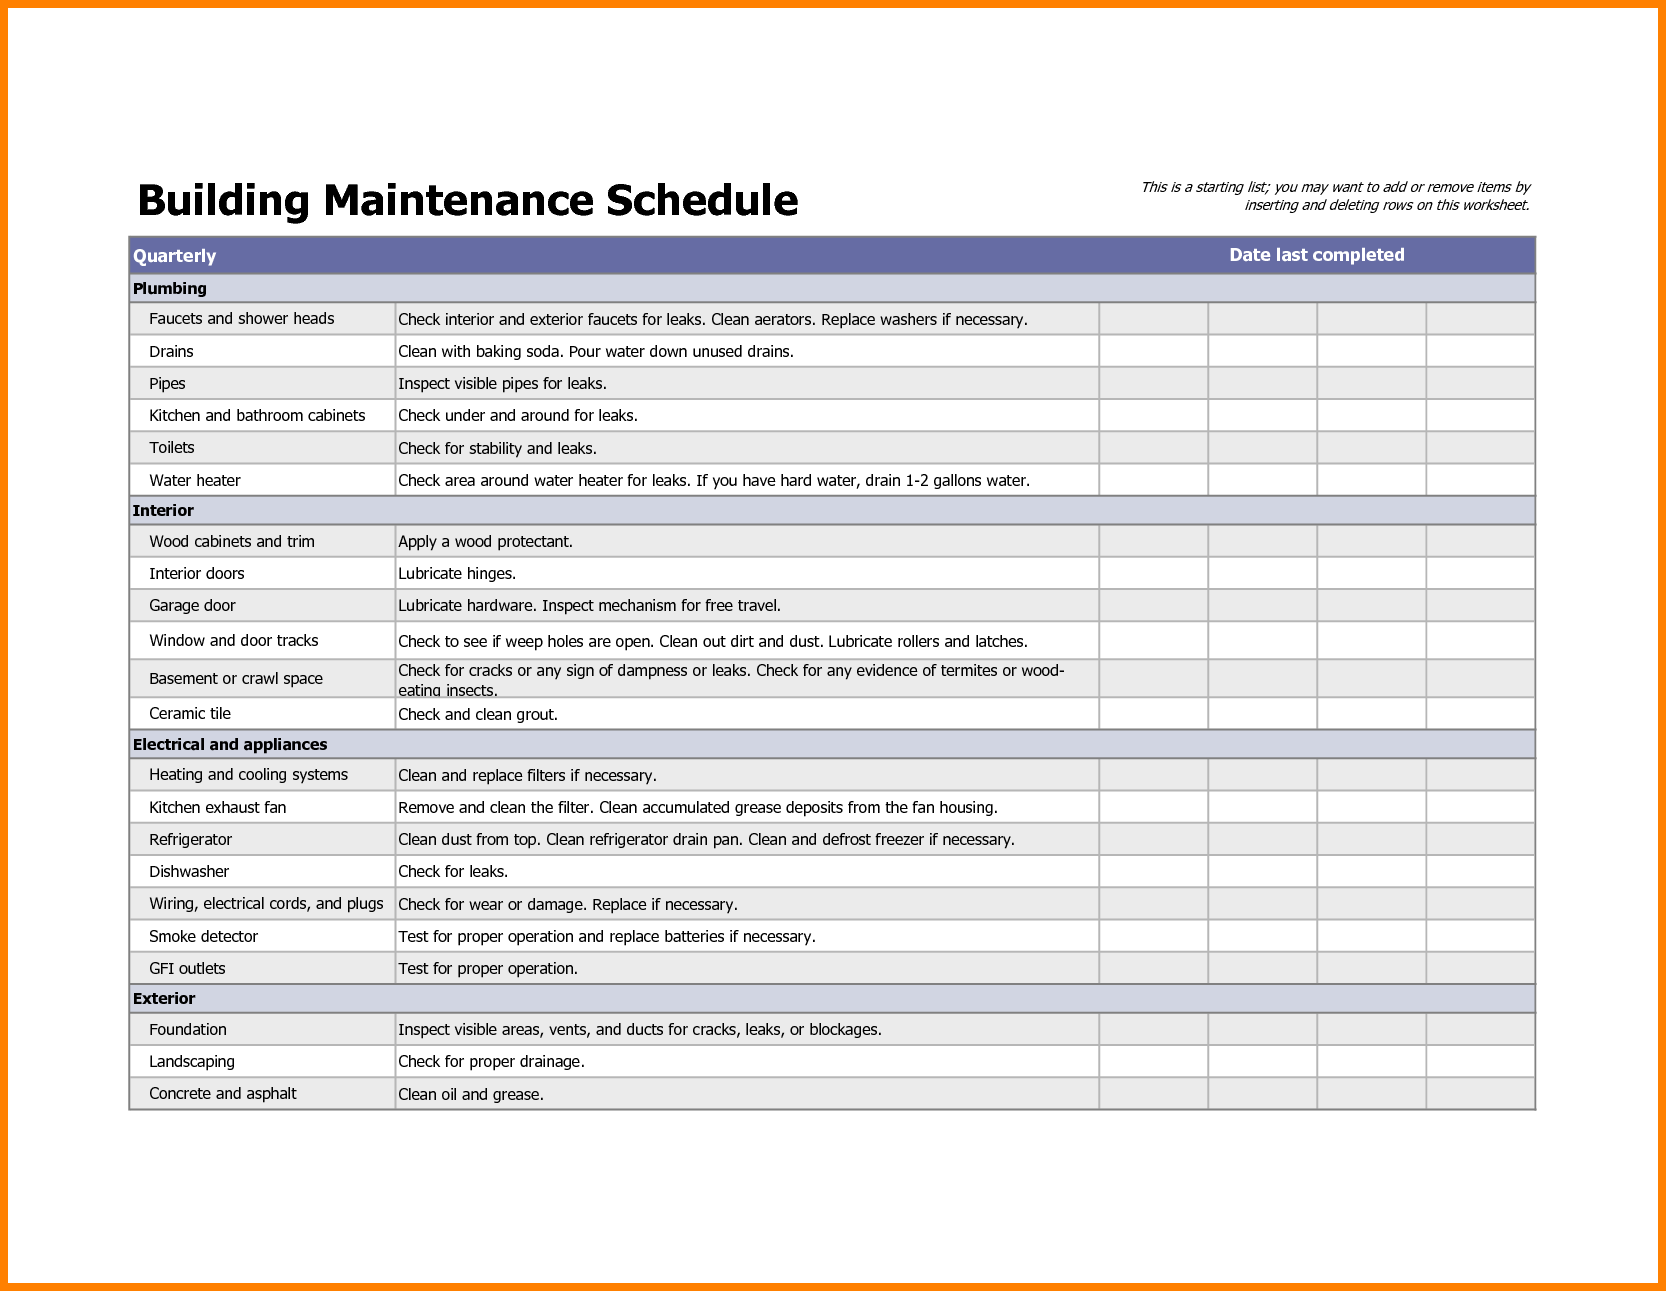 Building maintenance checklist DOWNLOAD at http://.xltemplates 